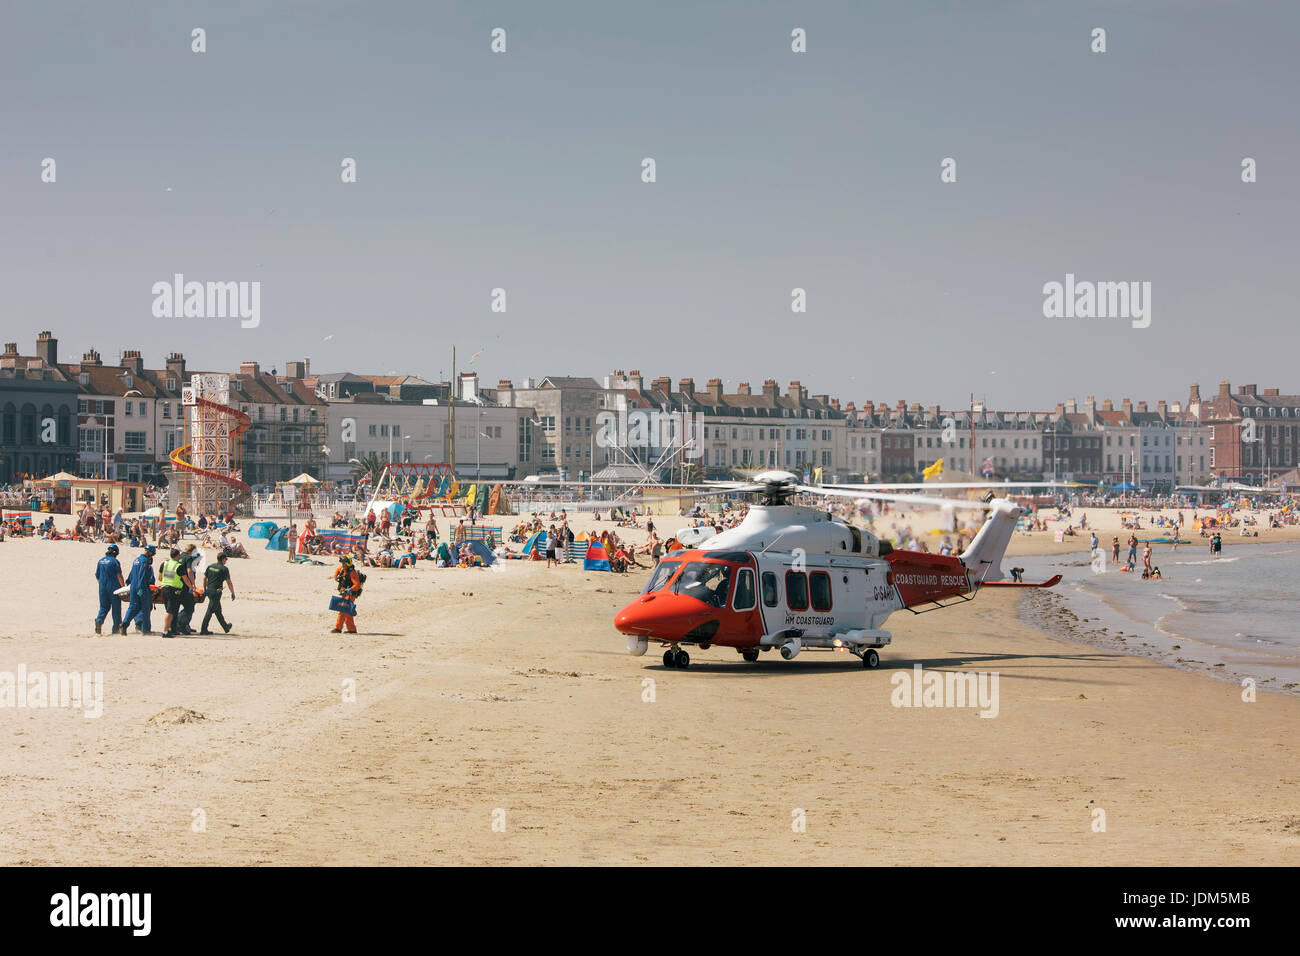 Weymouth, Dorest, Reino Unido. 21 Jun, 2017. Helicóptero guardacostas aterriza en Weymouth playa después de persona contrae, Dorset, Reino Unido Foto: Justin Glynn/Alamy Live News Foto de stock